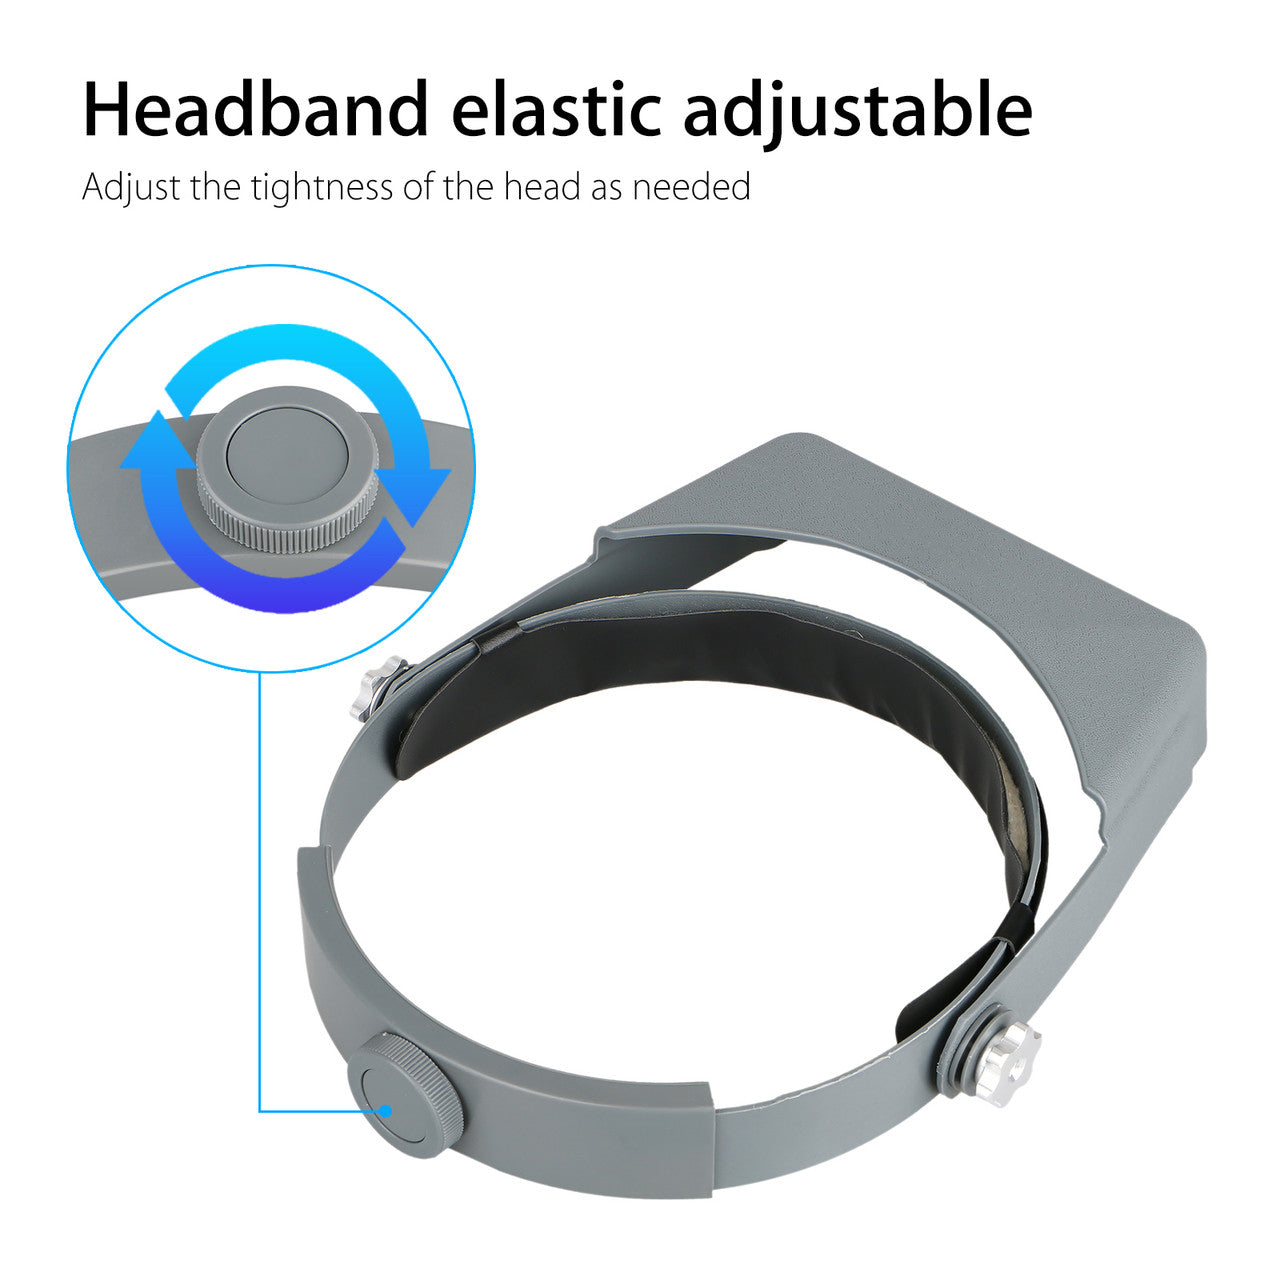 Headband Magnifier Jewelry Visor Opitcal Glass Binocular Magnifier w/ Lens, 4" Focal Length 1.5X 2X 2.5X 3.5x Magnification